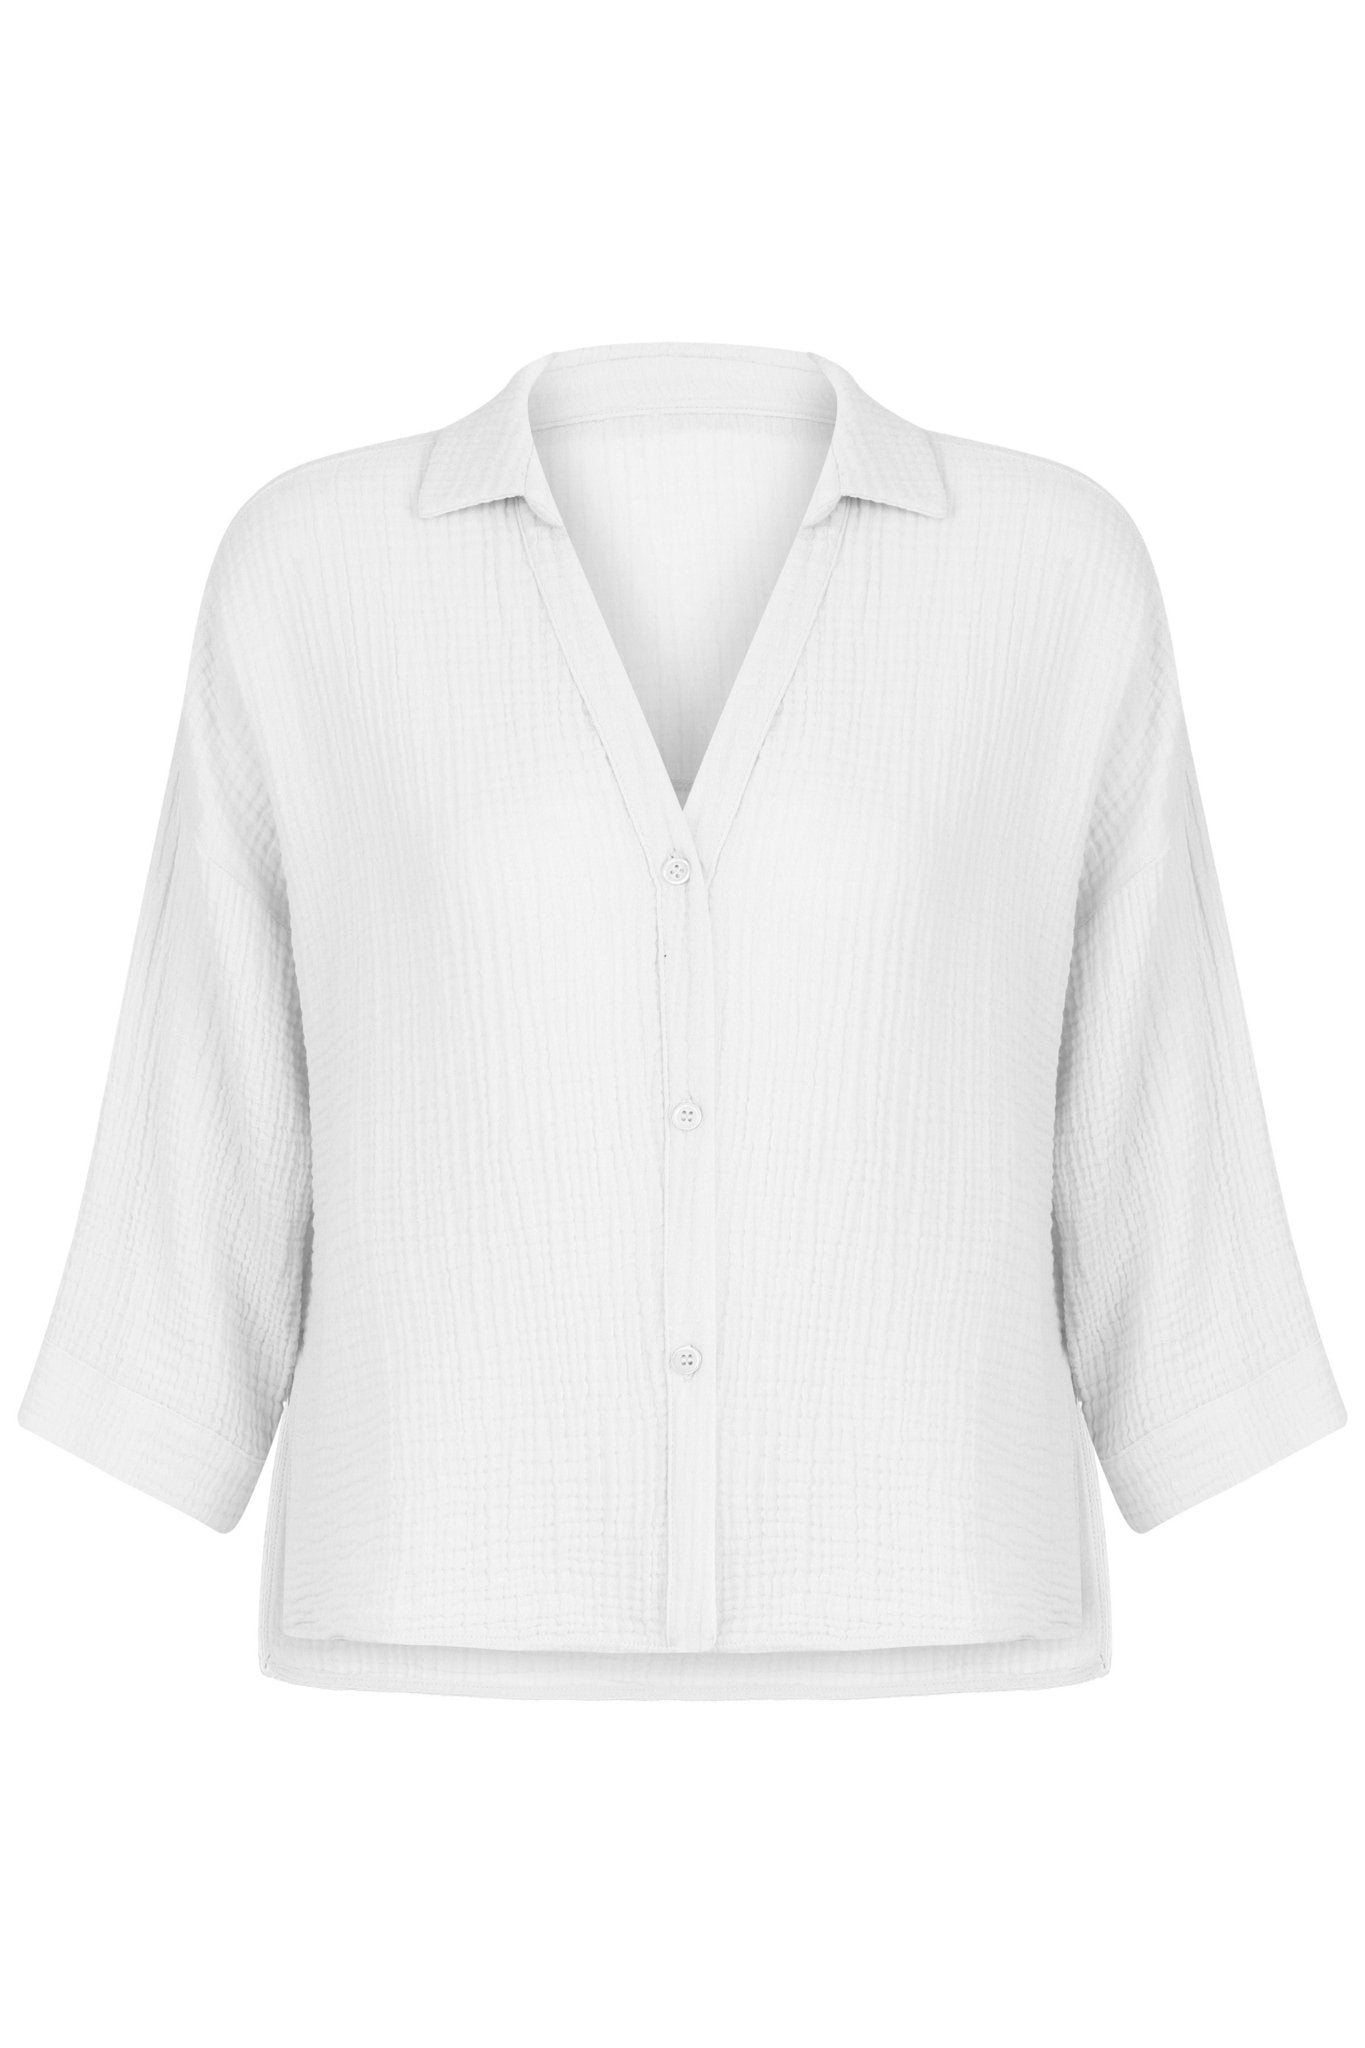 Echo Mini Shirt - White by The Handloom